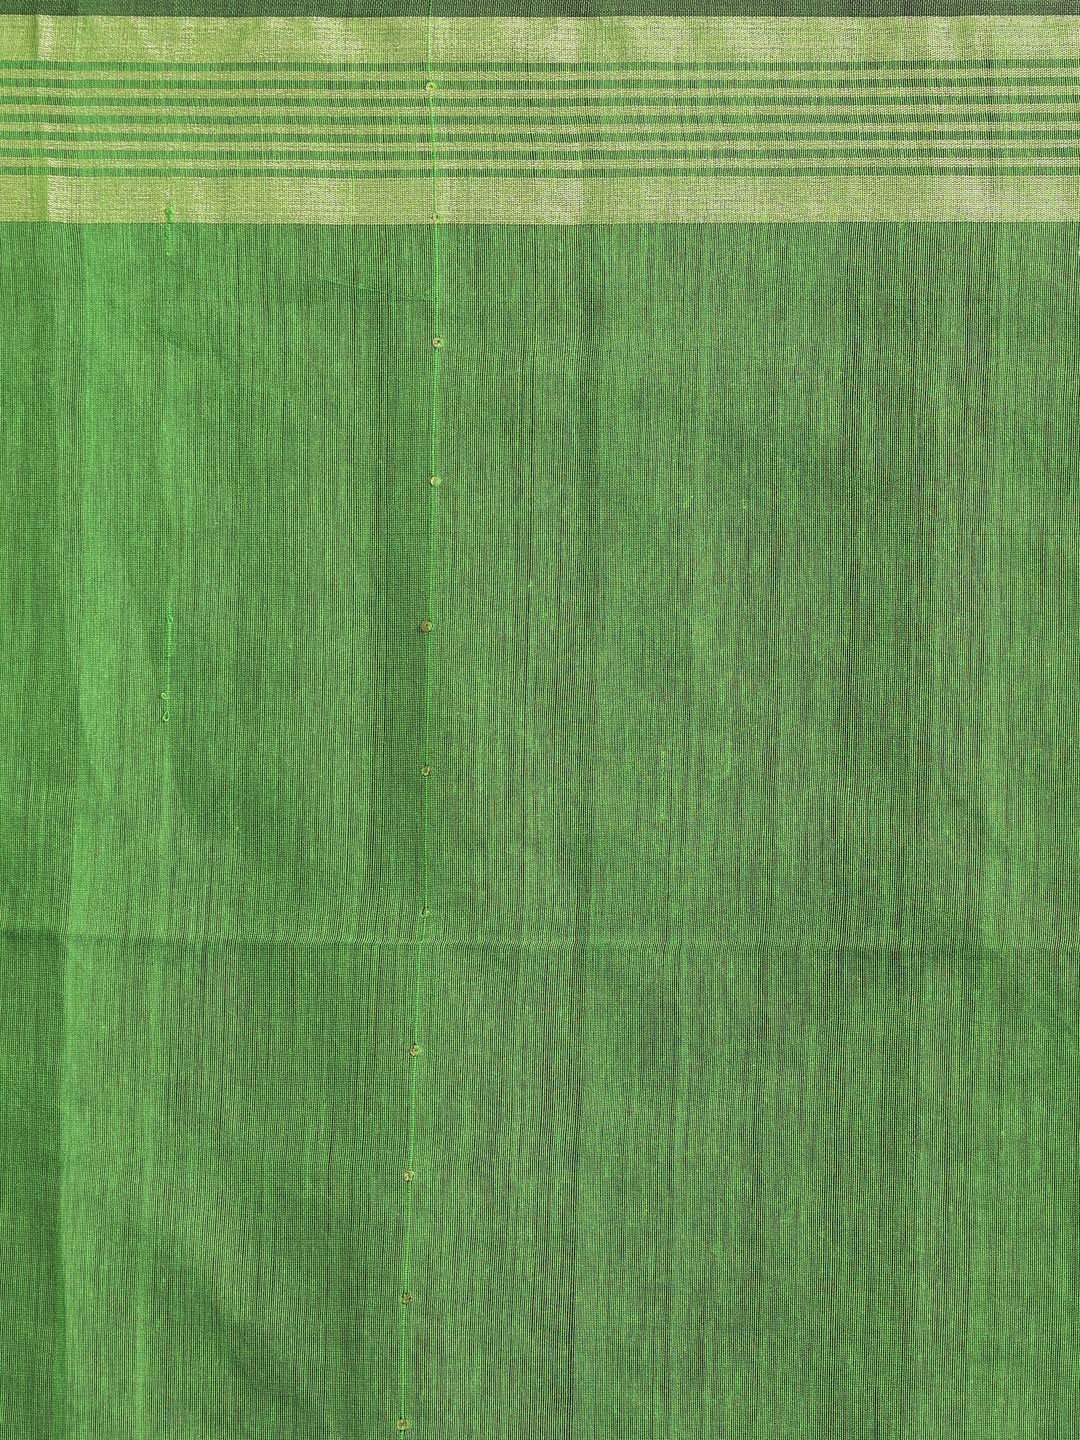 Indethnic Green Bengal Handloom Cotton Blend Party Saree - Saree Detail View